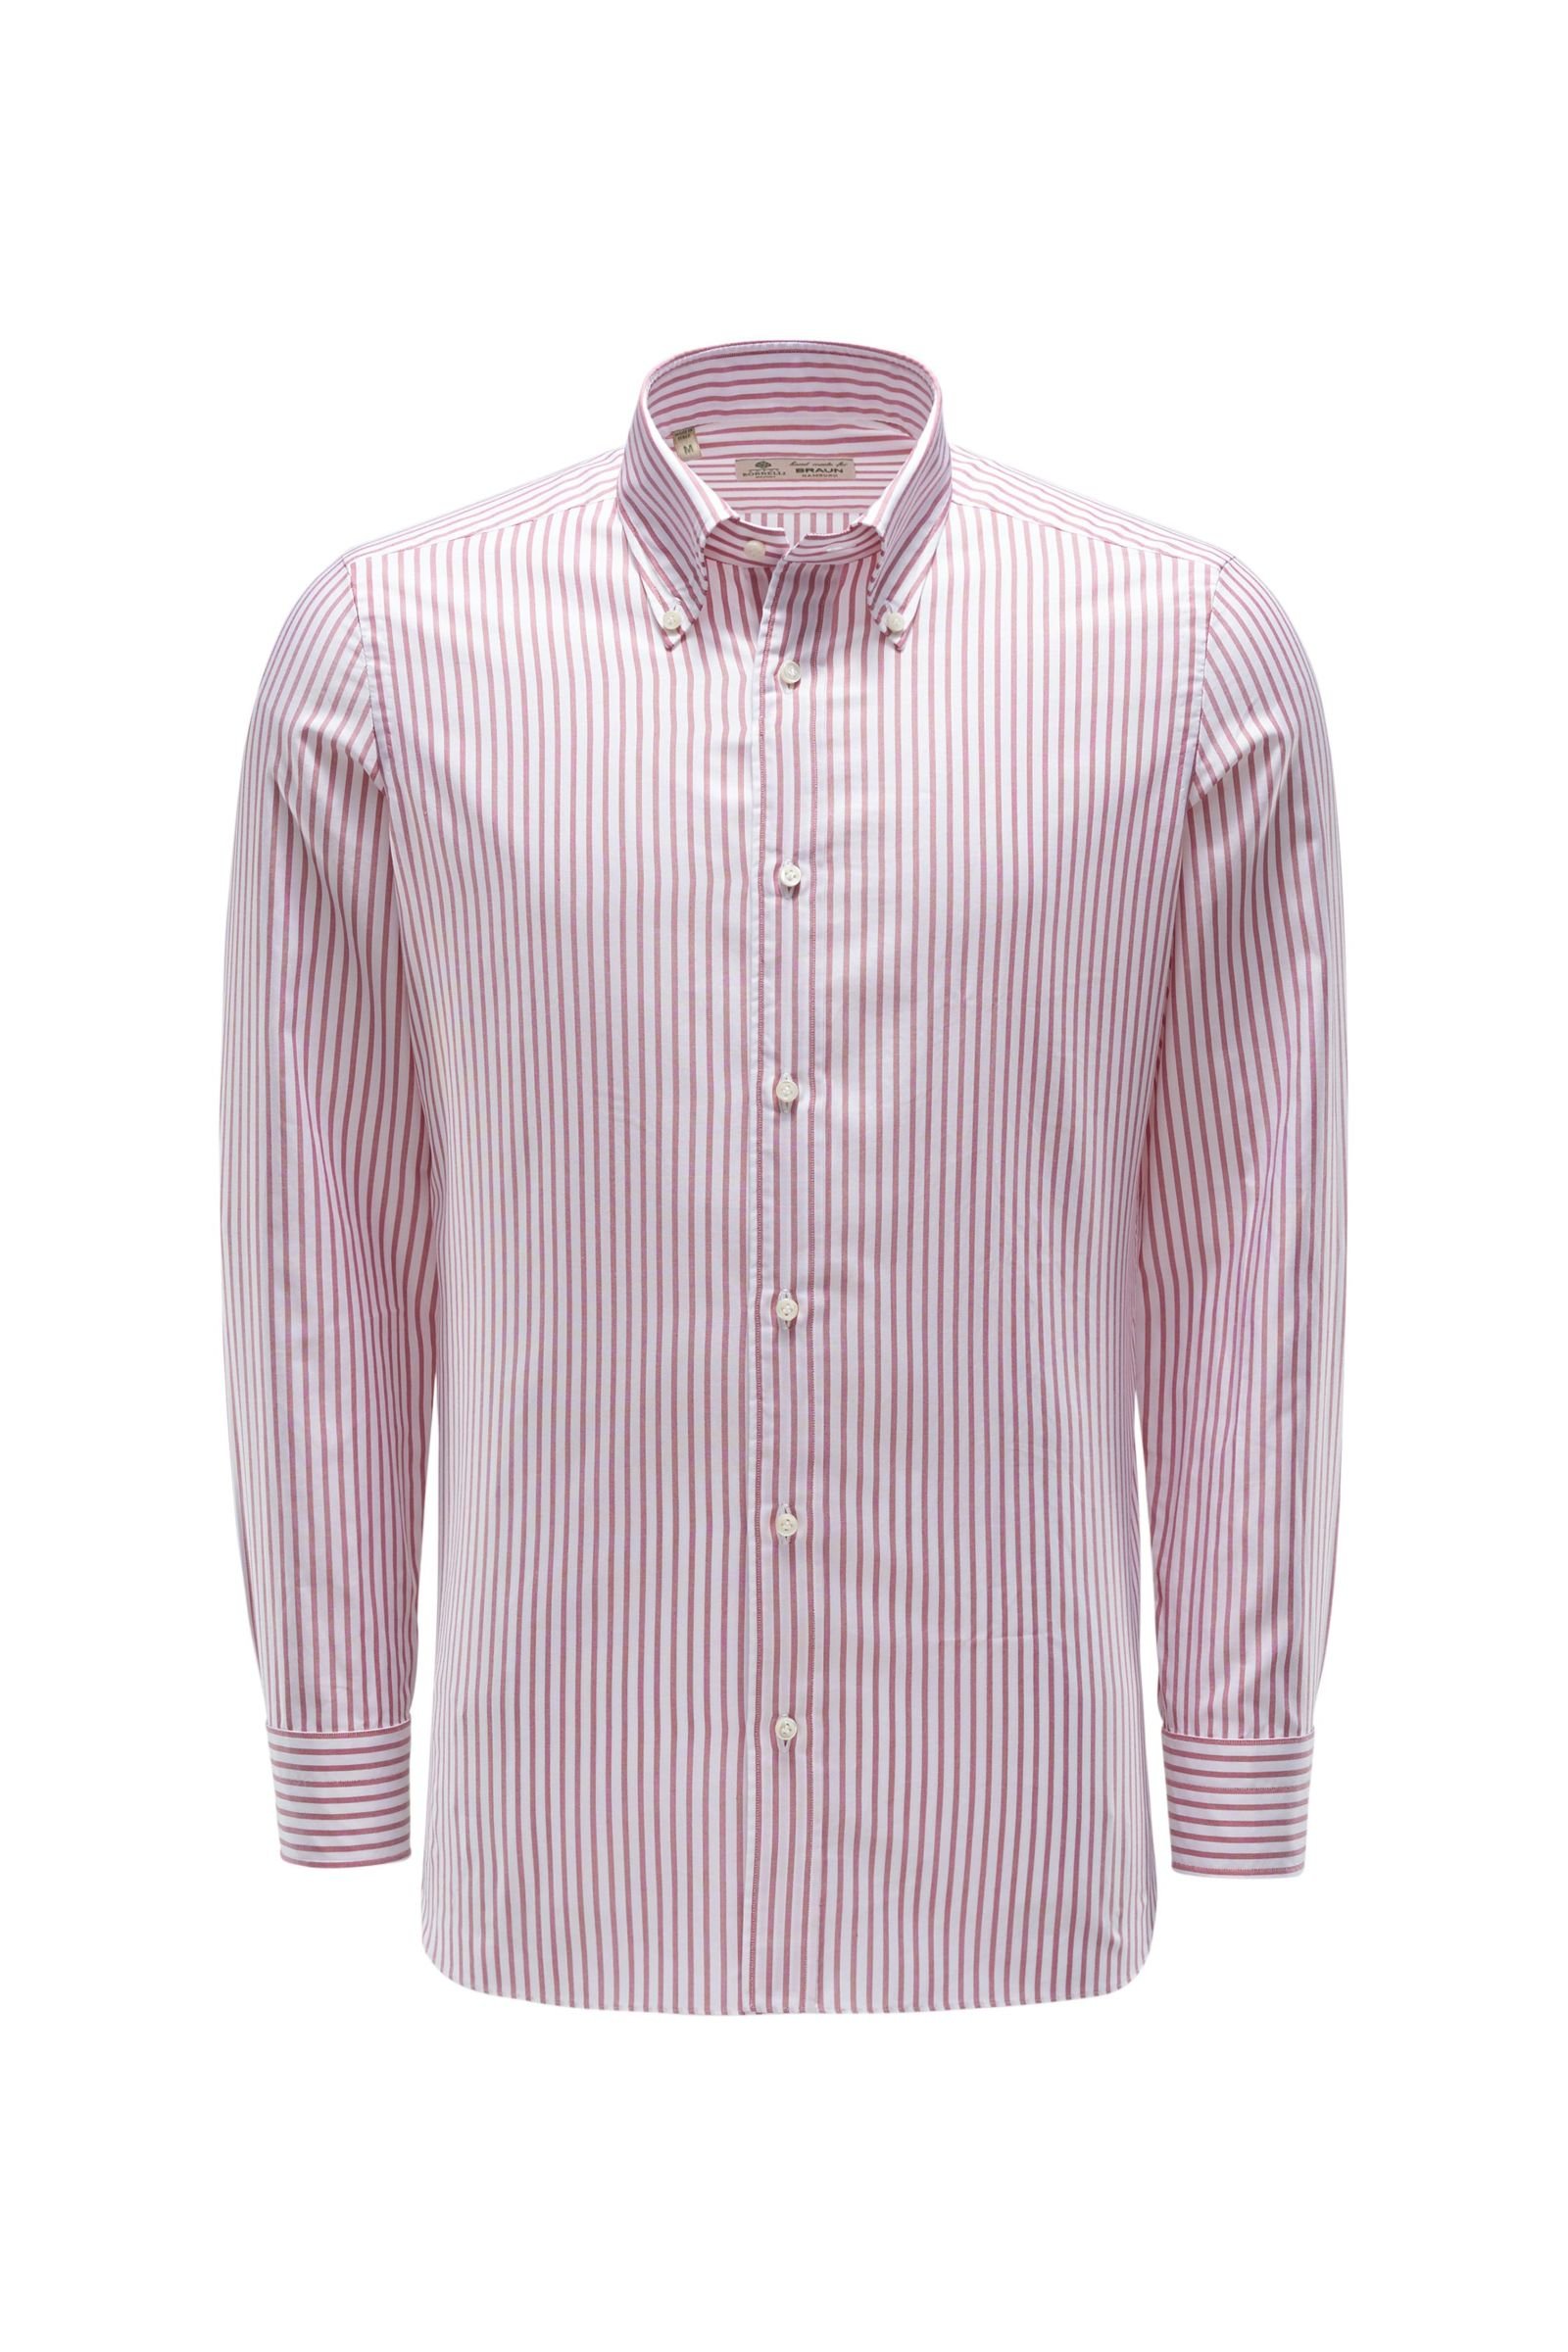 Oxford shirt button-down collar red/white striped